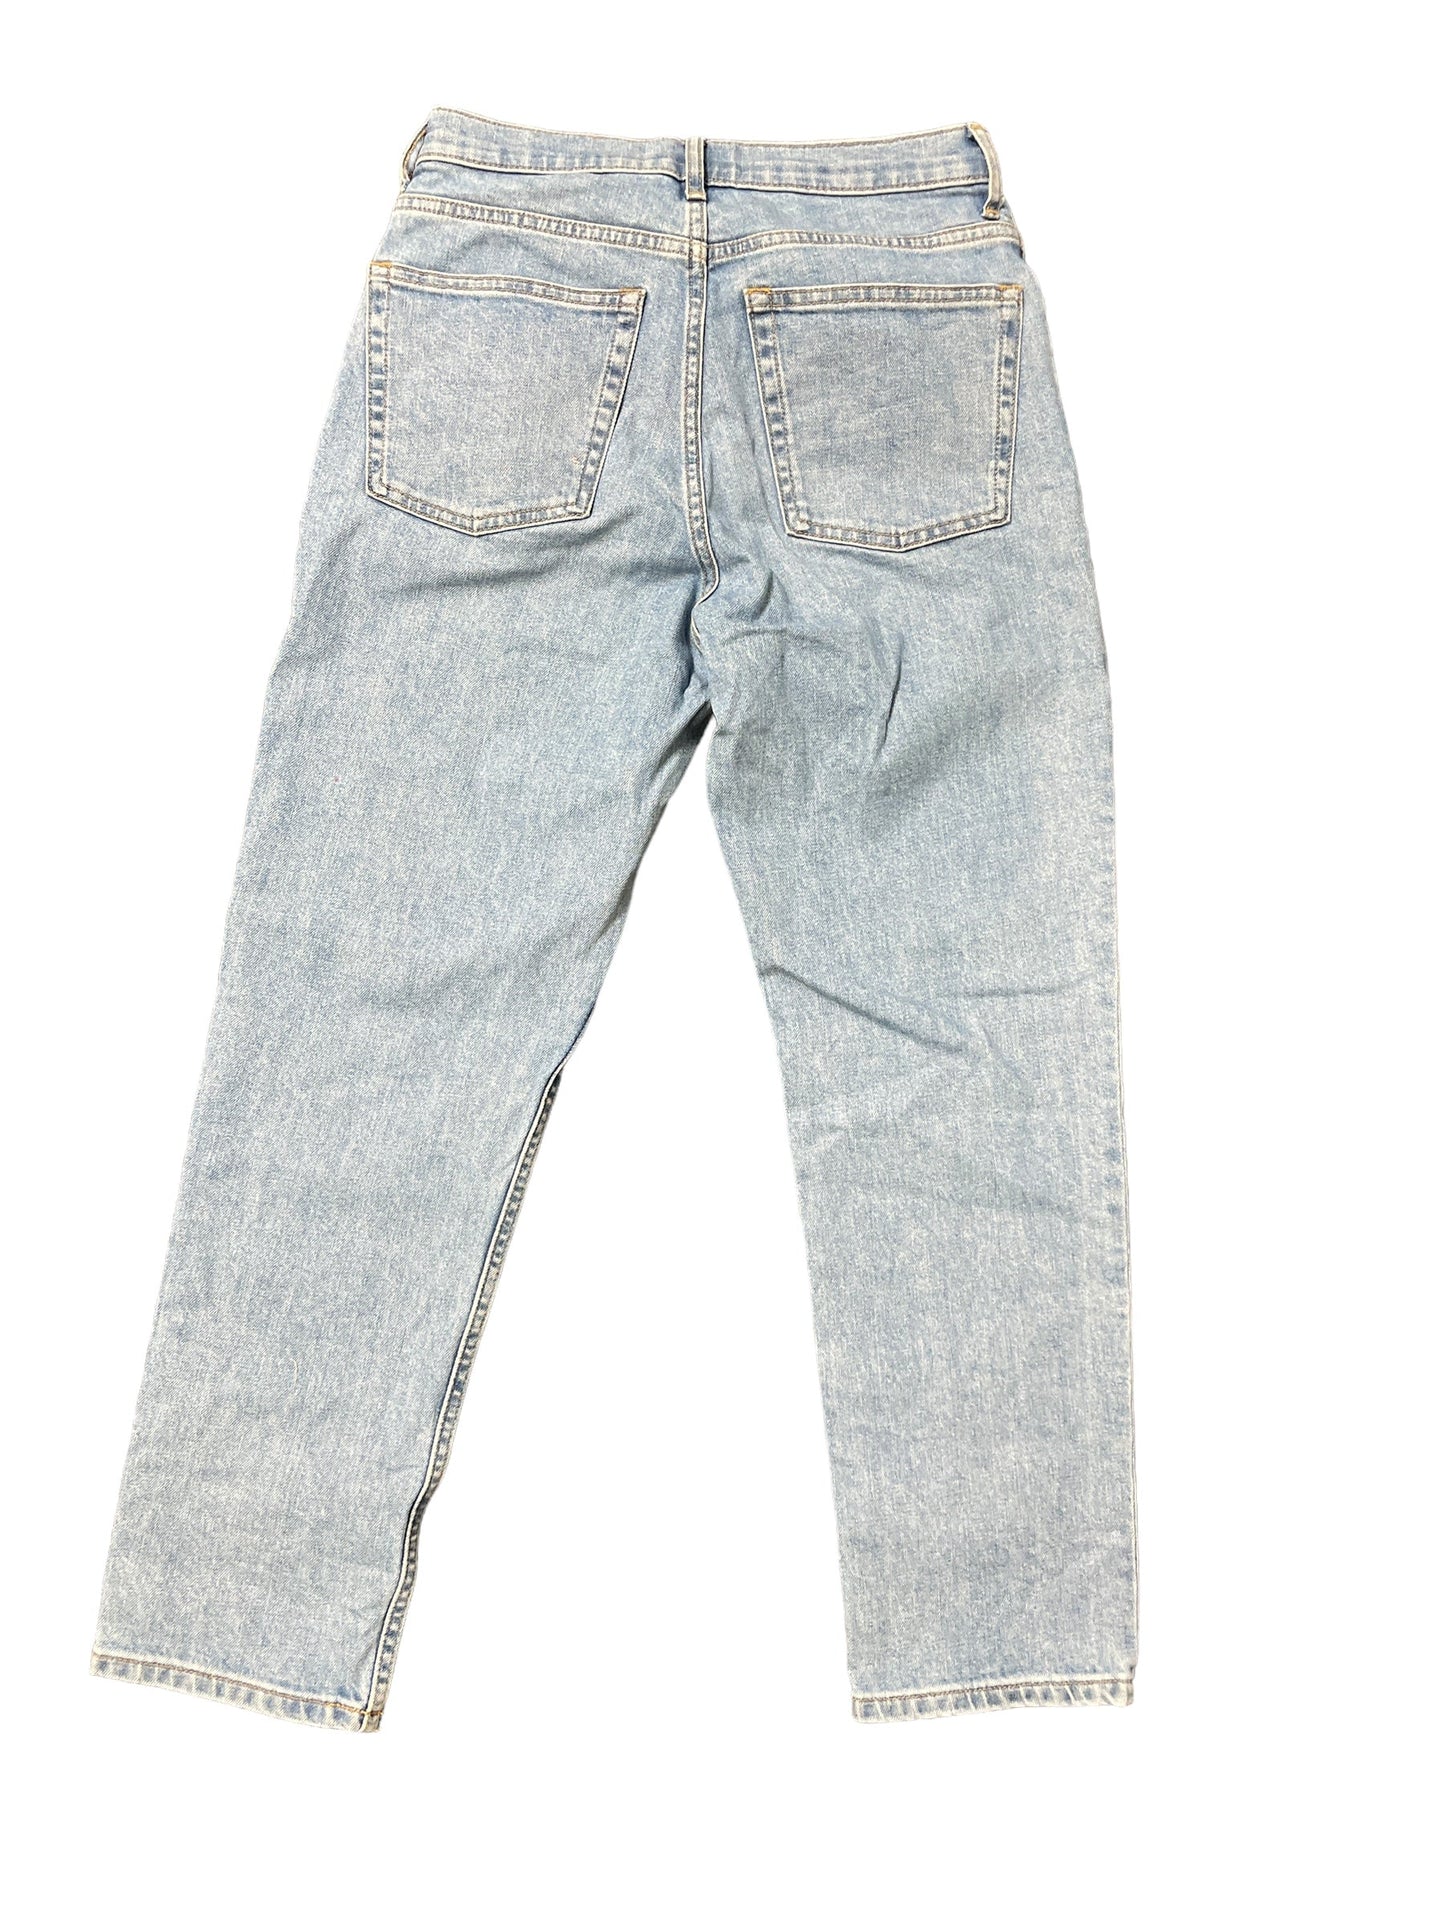 Blue Denim Jeans Straight Everlane, Size 4